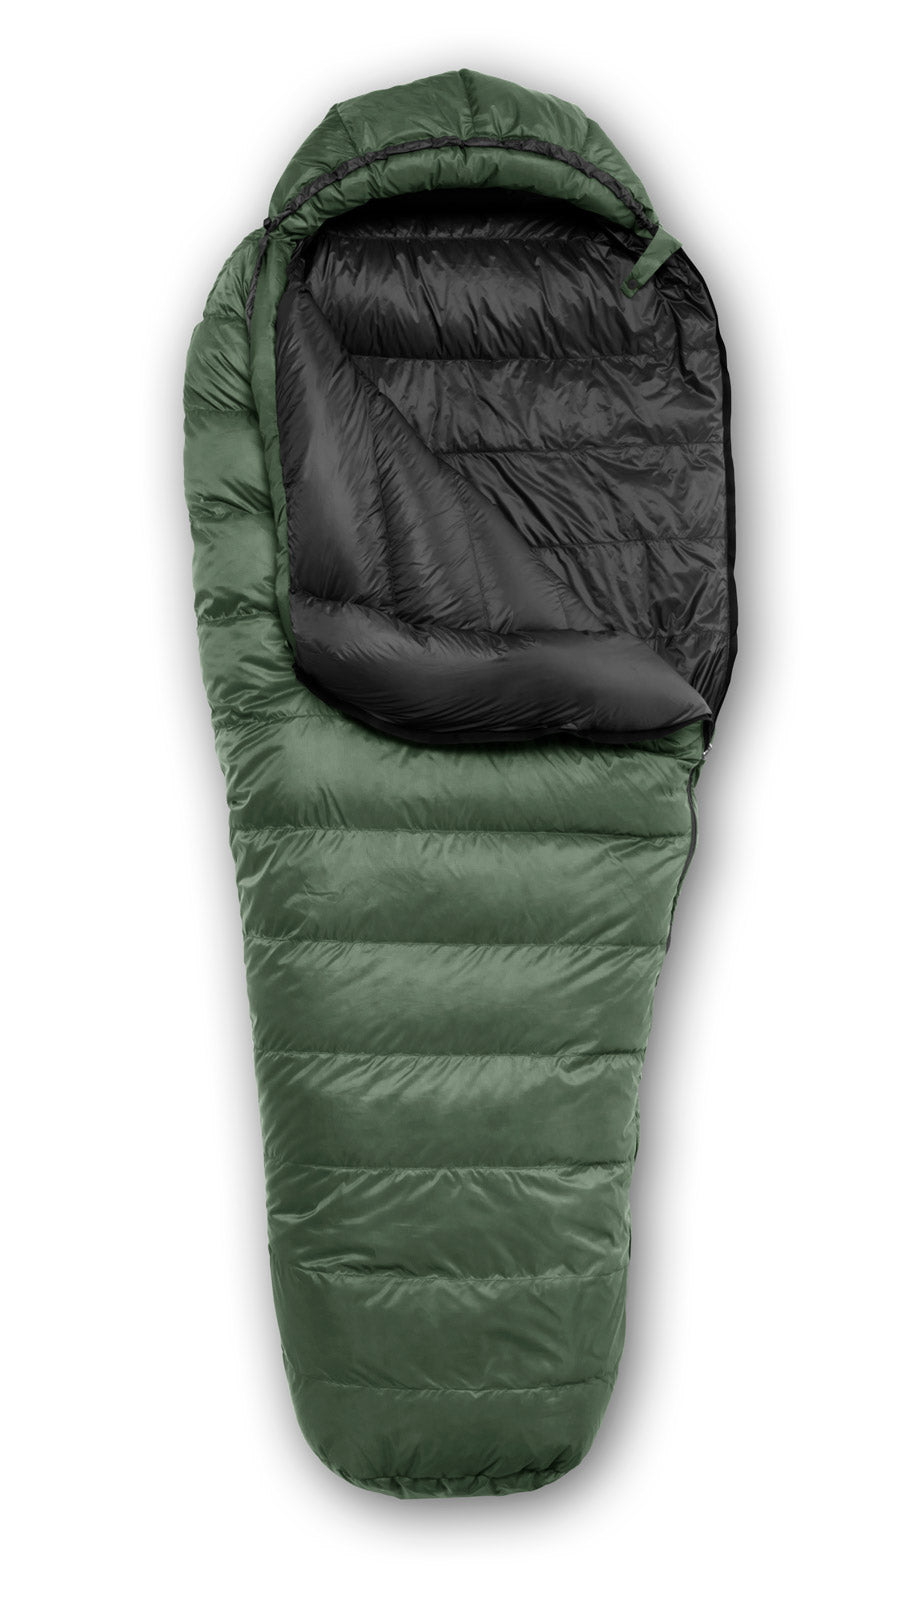 Illumi-Bug™ 45 Youth Sleeping Bag